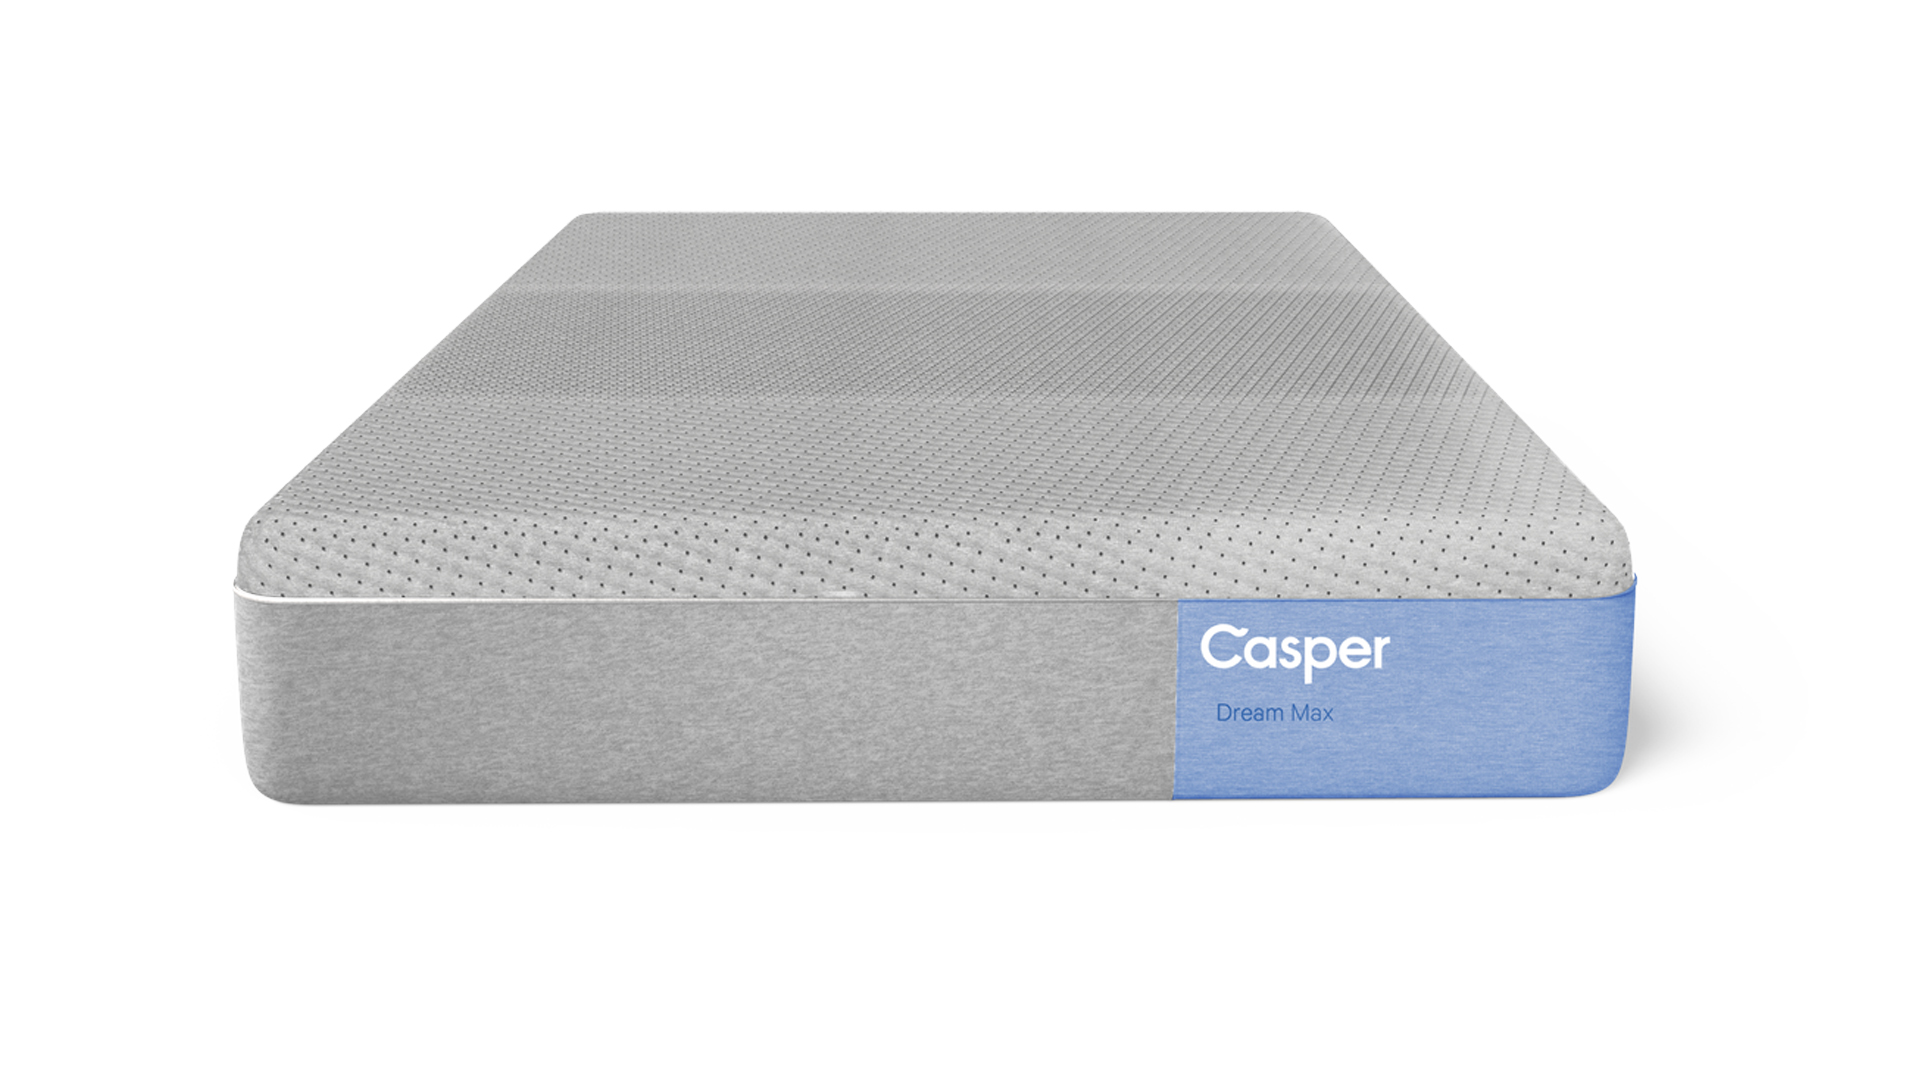 Casper Dream Max Hybrid product image against a white background